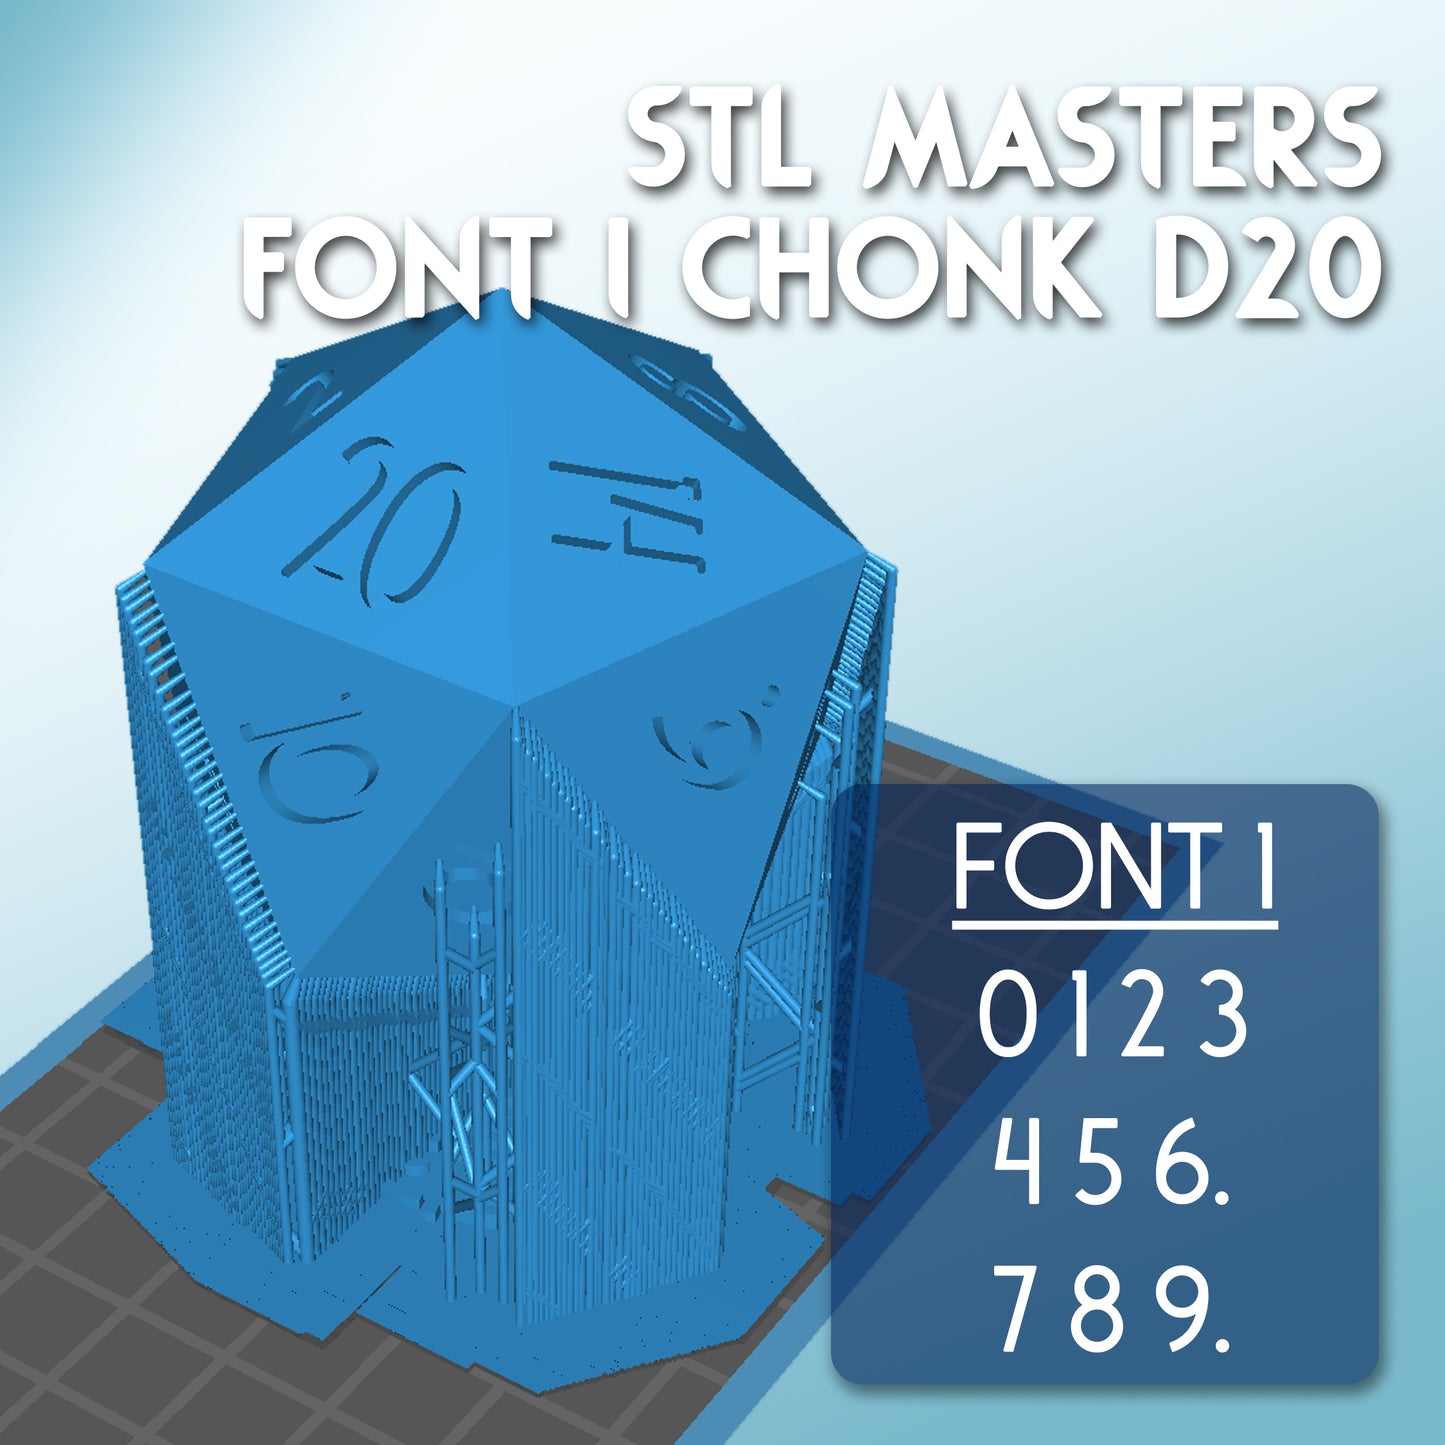 STL Master Dice Font 1 - 45mm Chonk D20 Dice